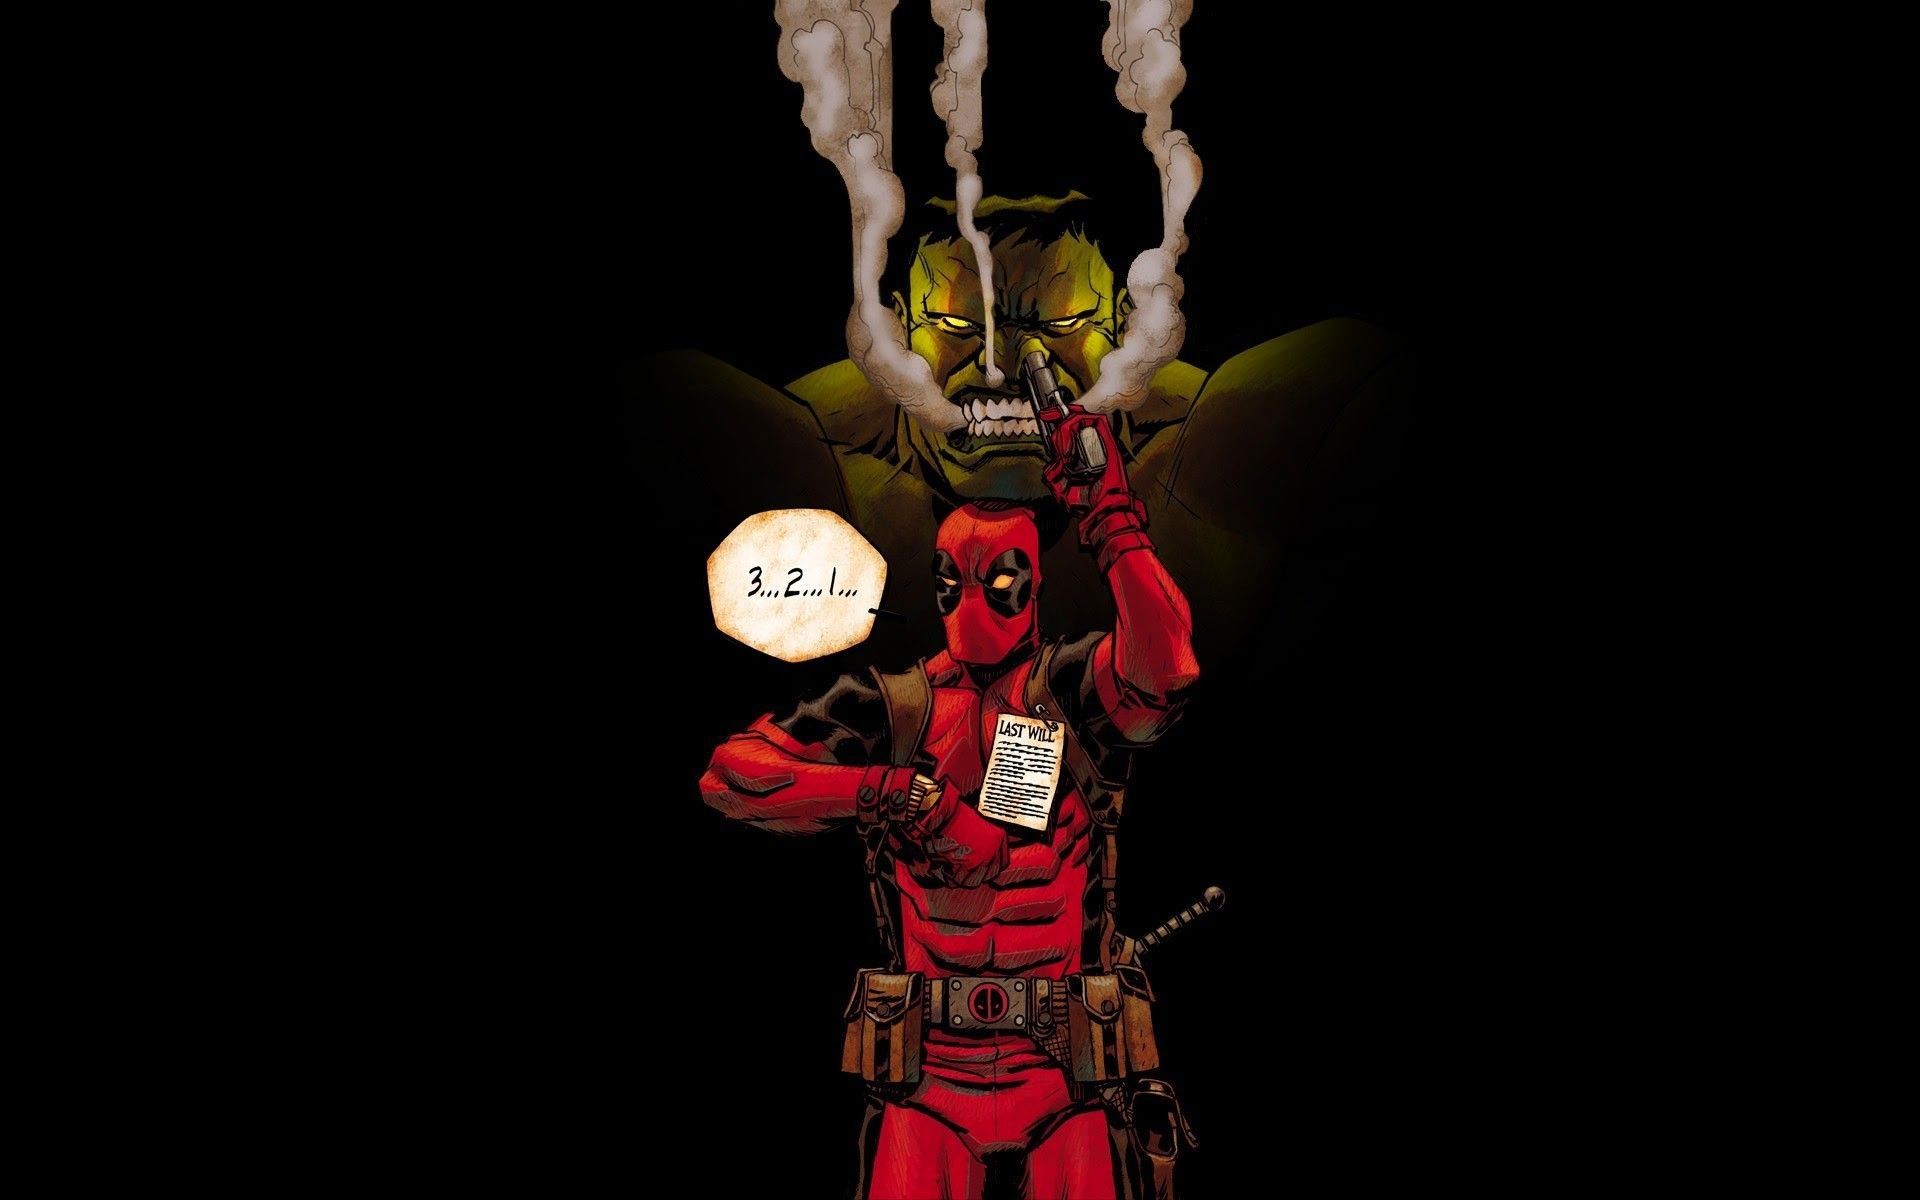 Supreme Deadpool  Magníficos, Vengadores marvel, Wallpaper marvel